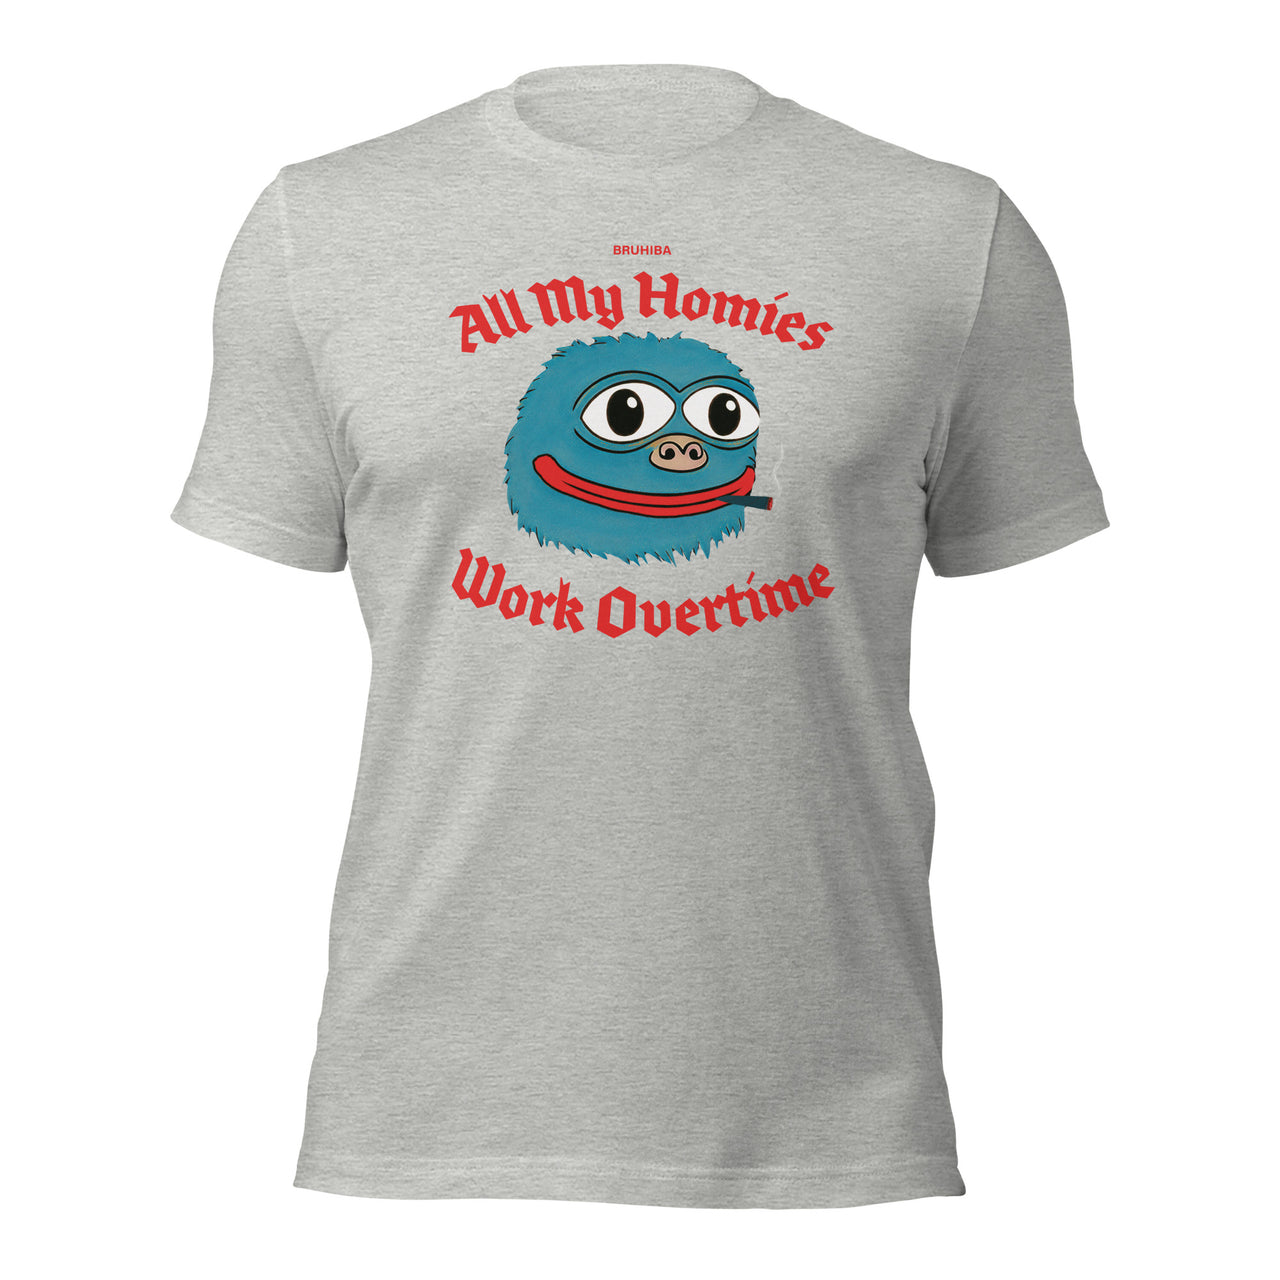 BRUHIBA "All My Homies Work Overtime" T-Shirt